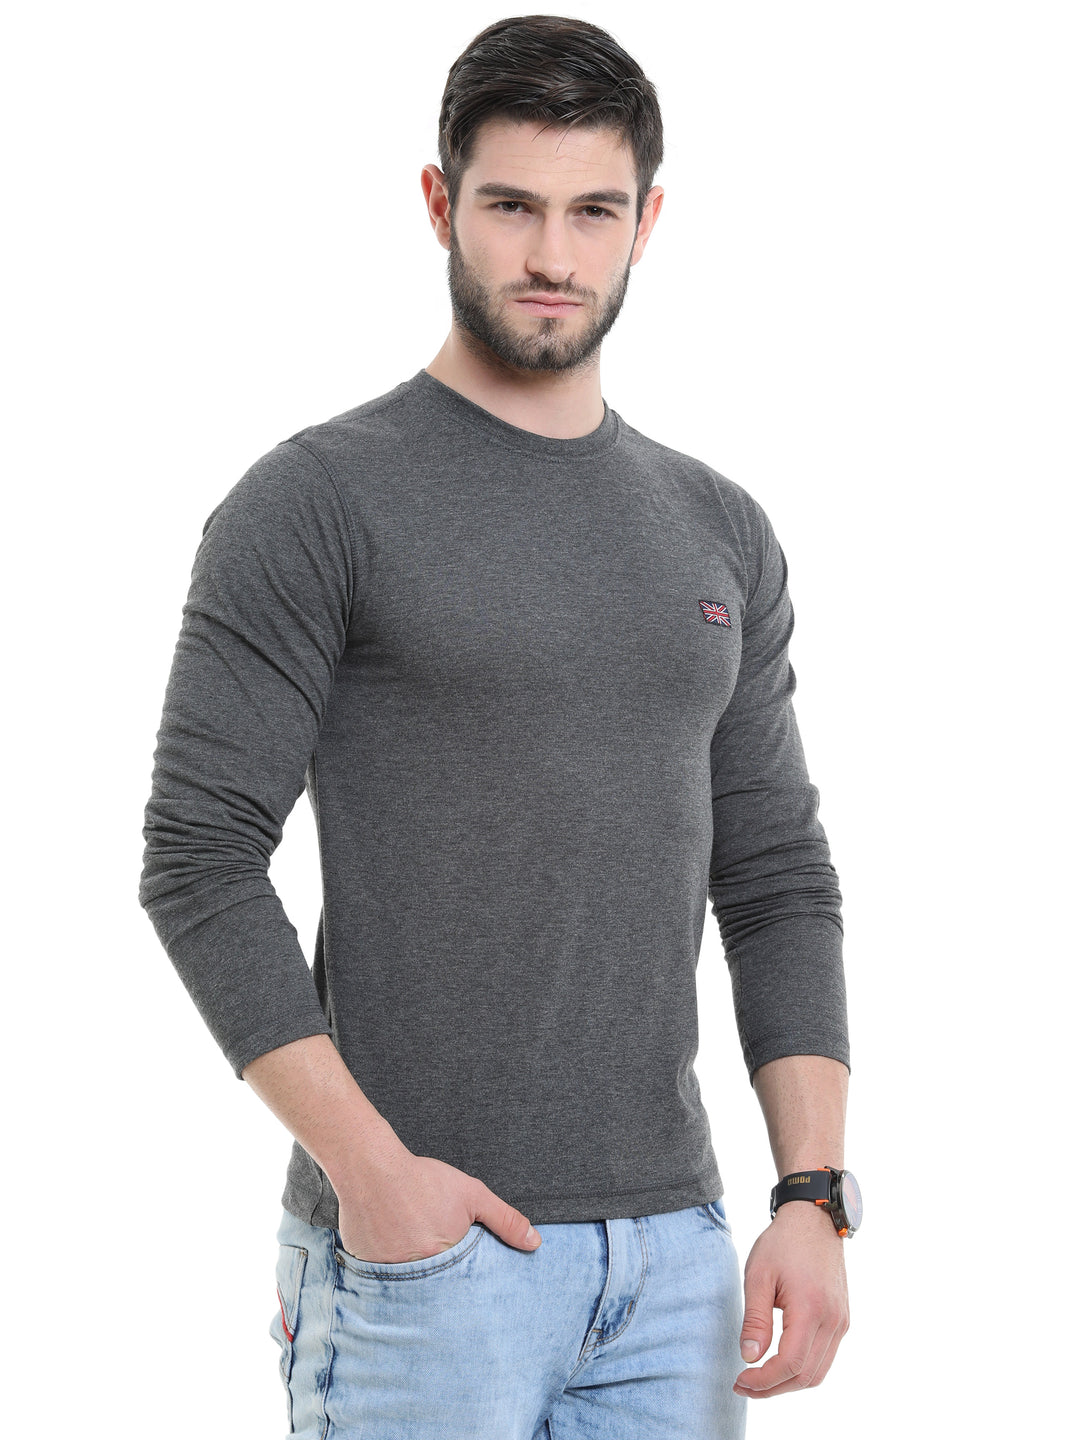 Long Sleeve T-Shirt (Charcoal Melange)